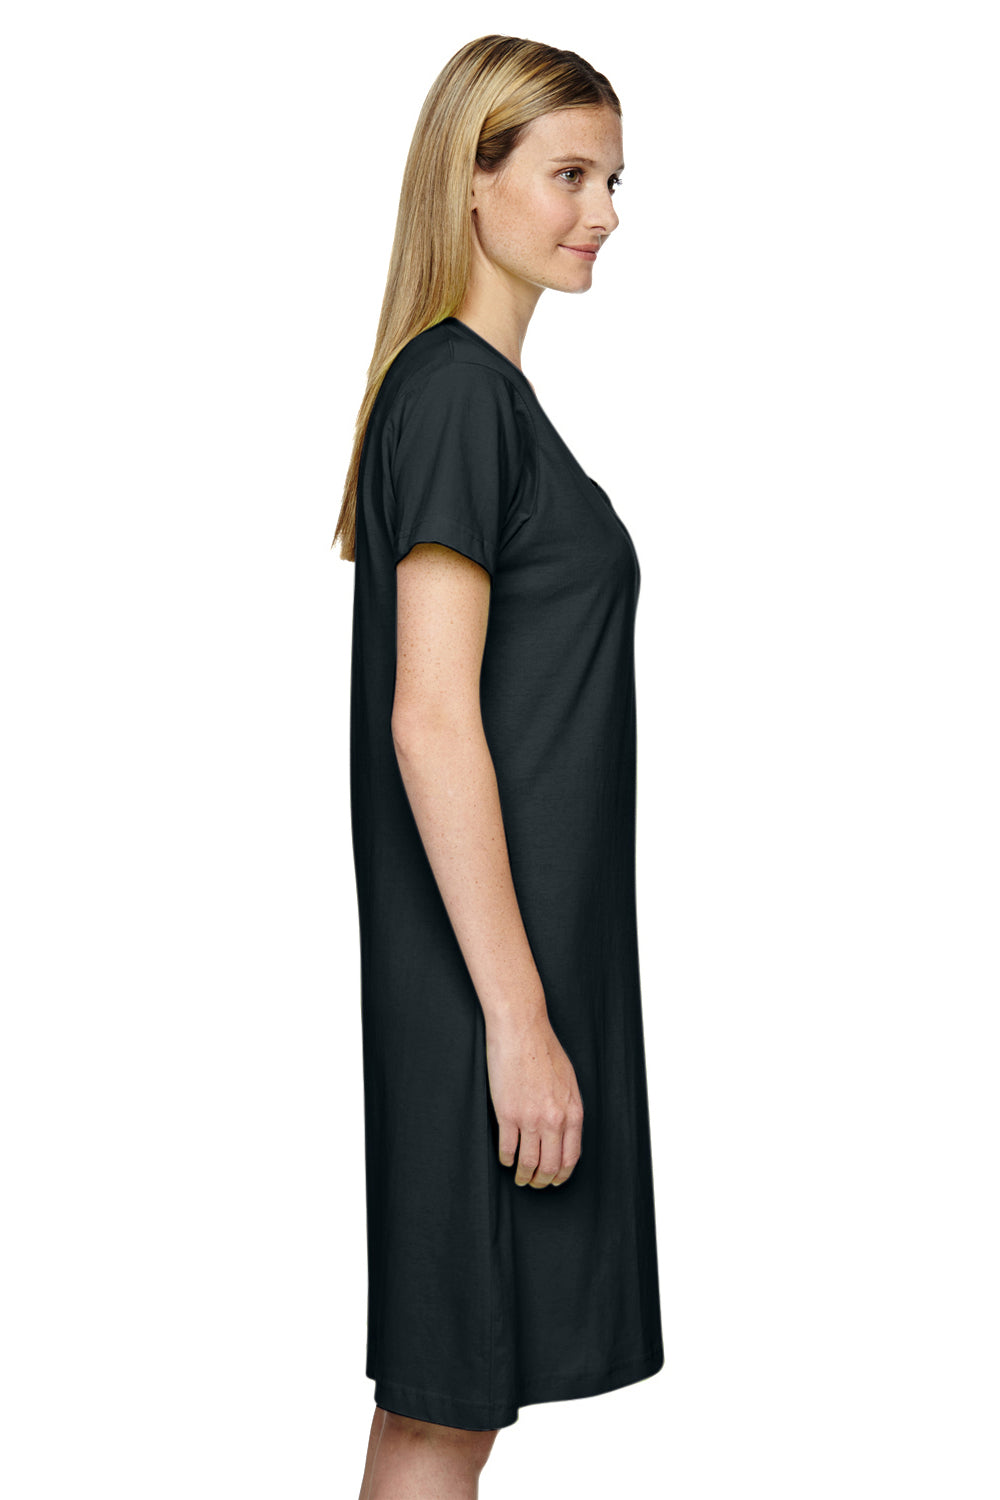 LAT 3522 Womens Short Sleeve T-Shirt Dress Black Side